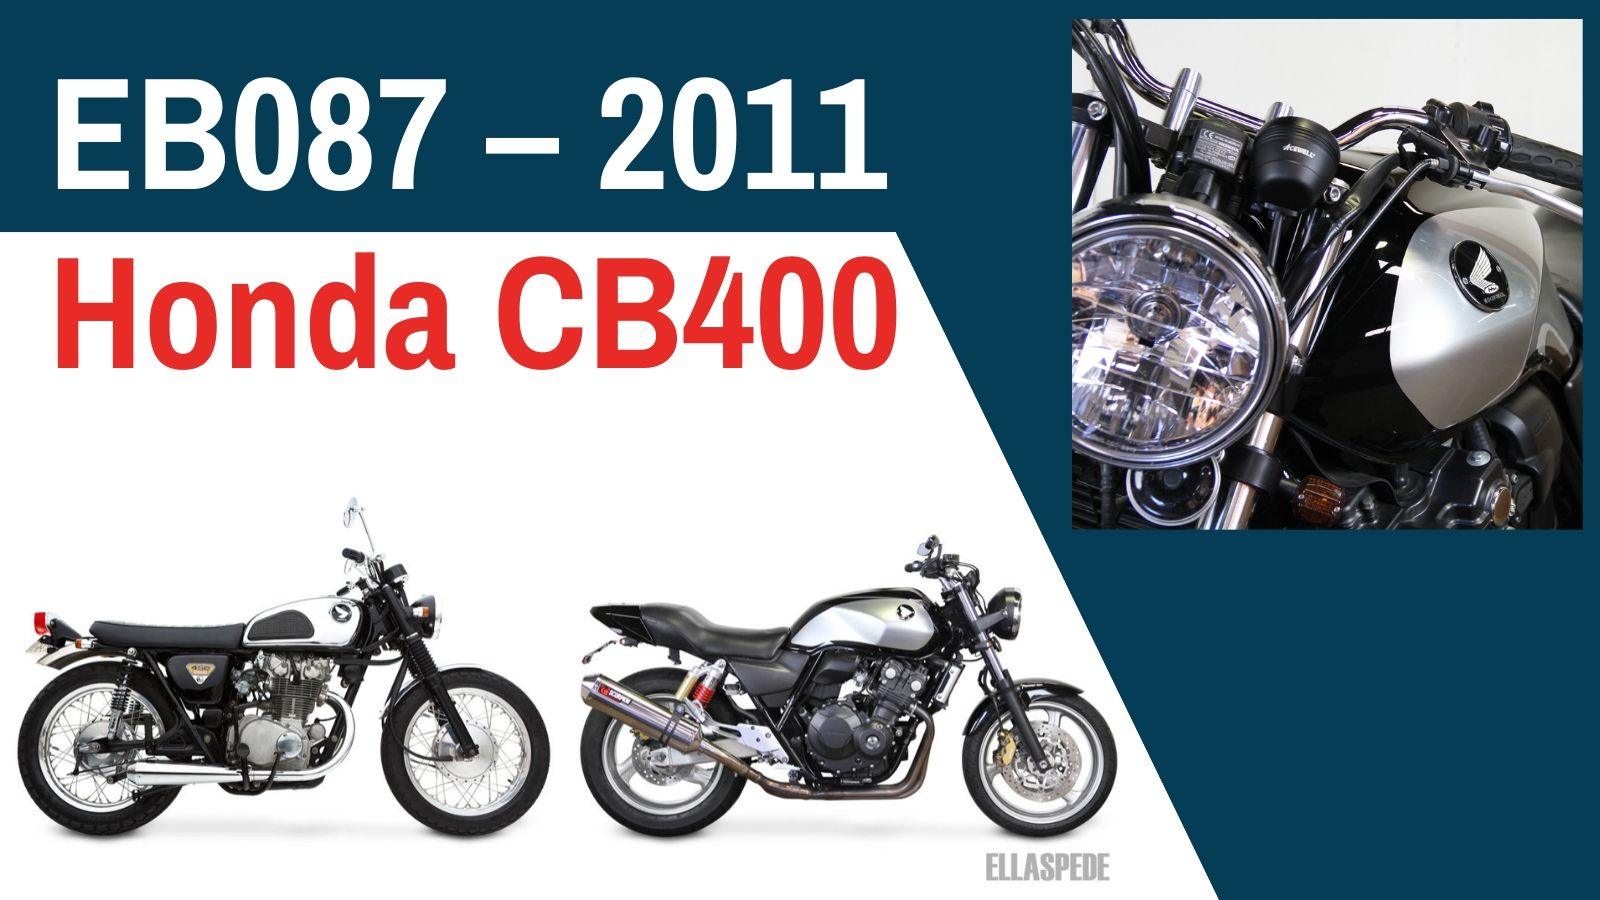 EB087 – 2011 Honda CB400